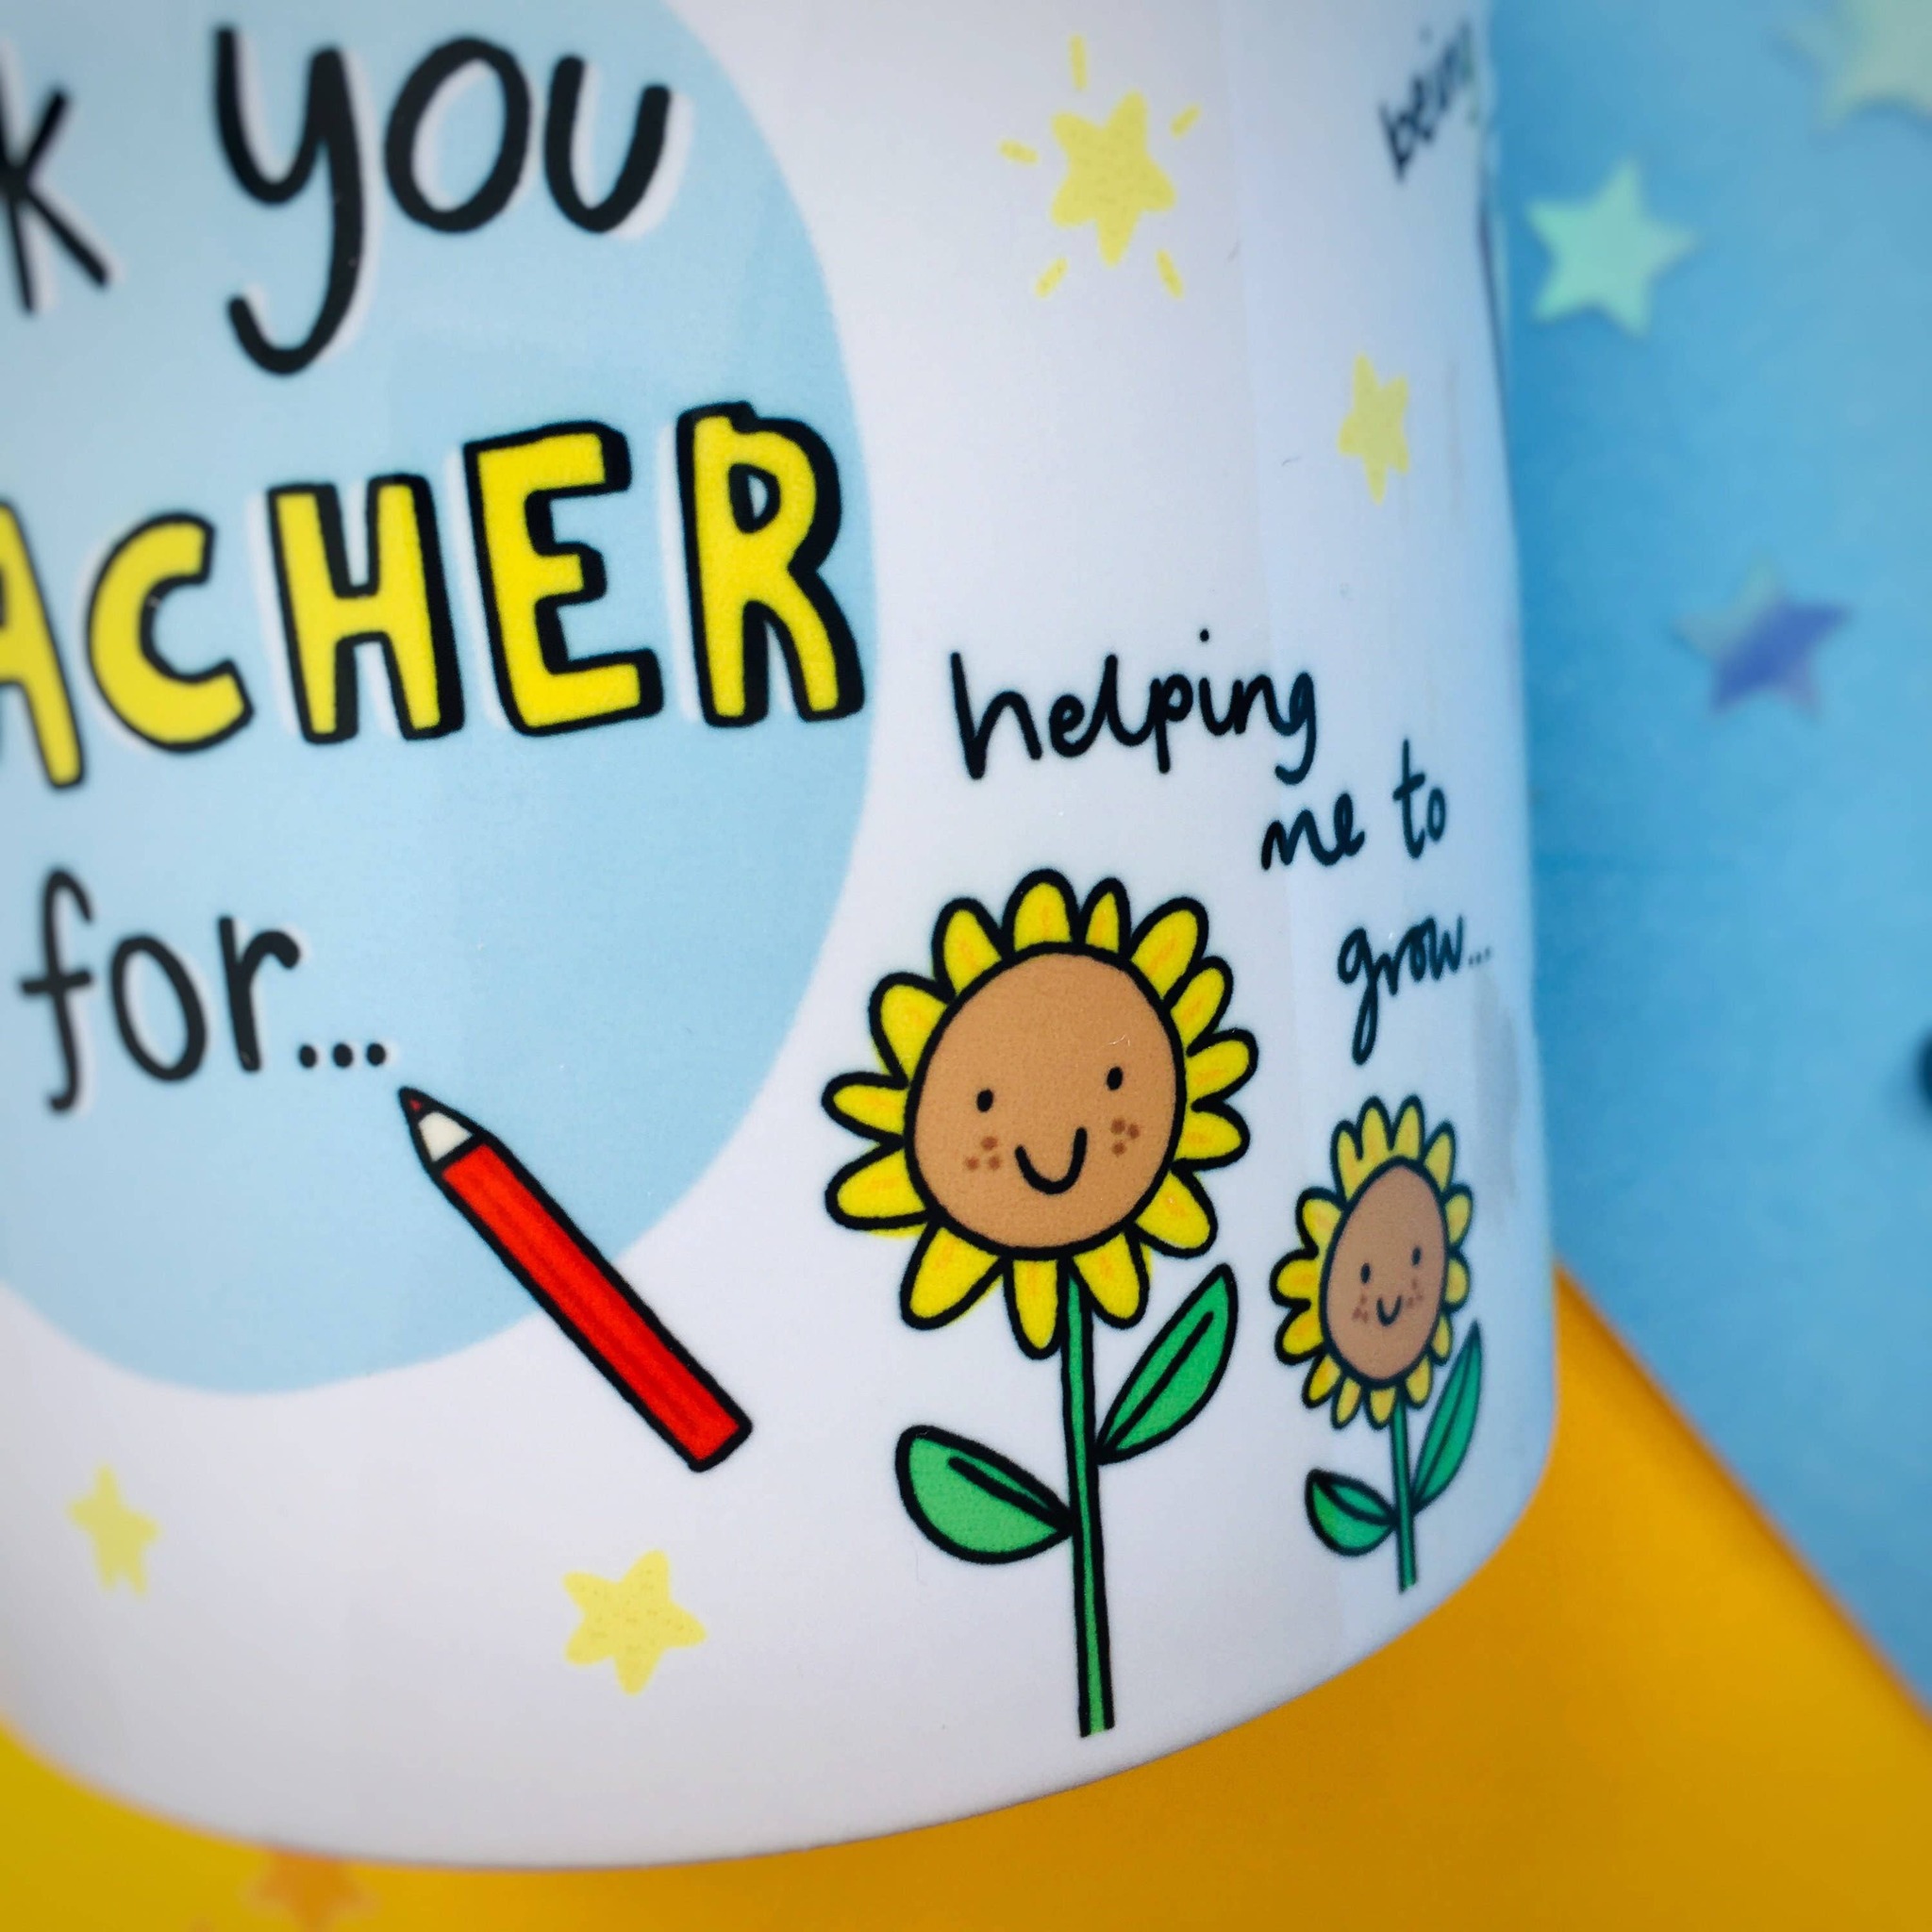 Grow Up Gaby - Thank you Teacher... Mug